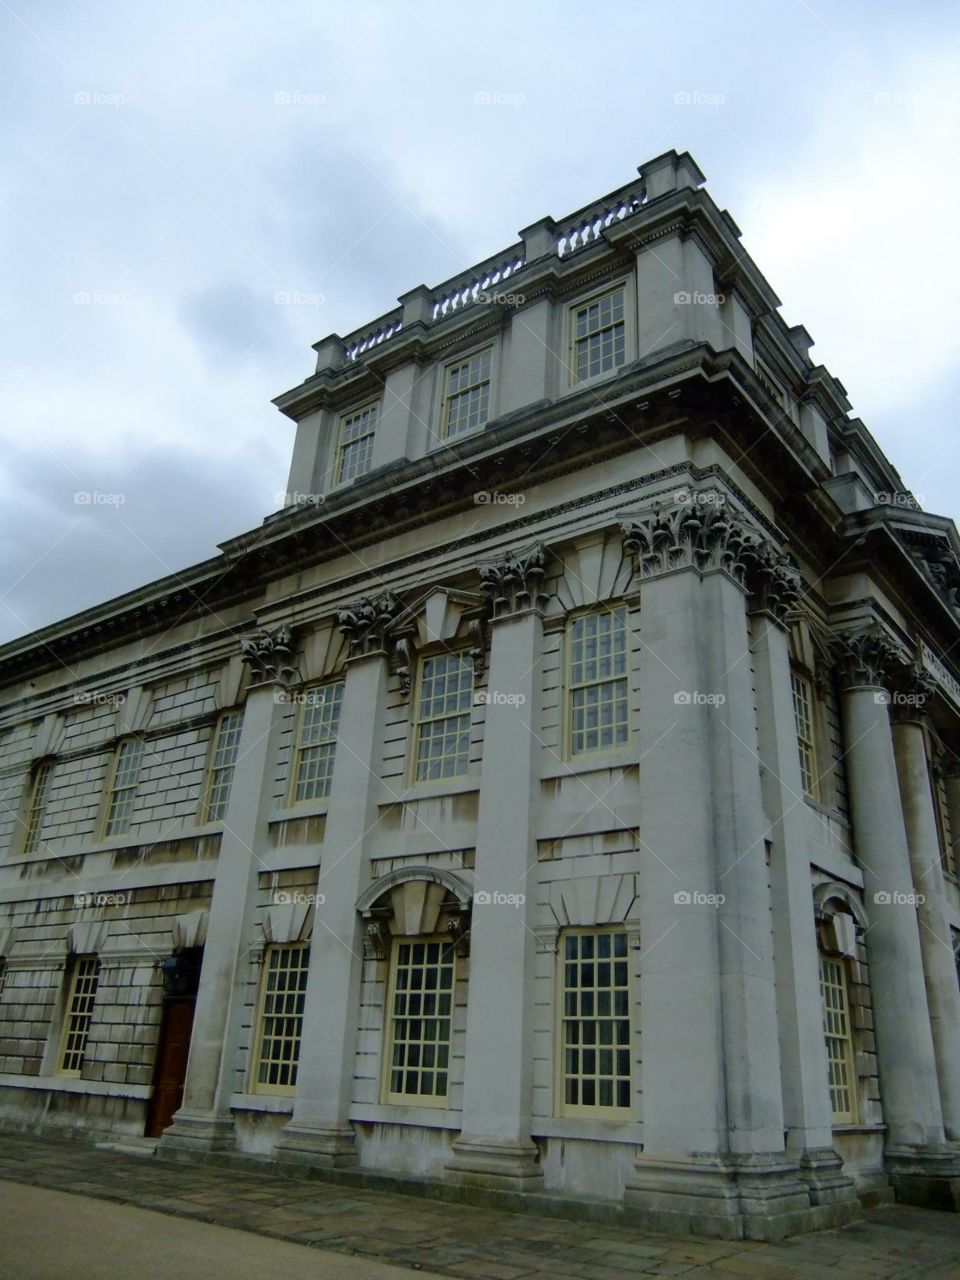 Royal Naval College, Greenwich 